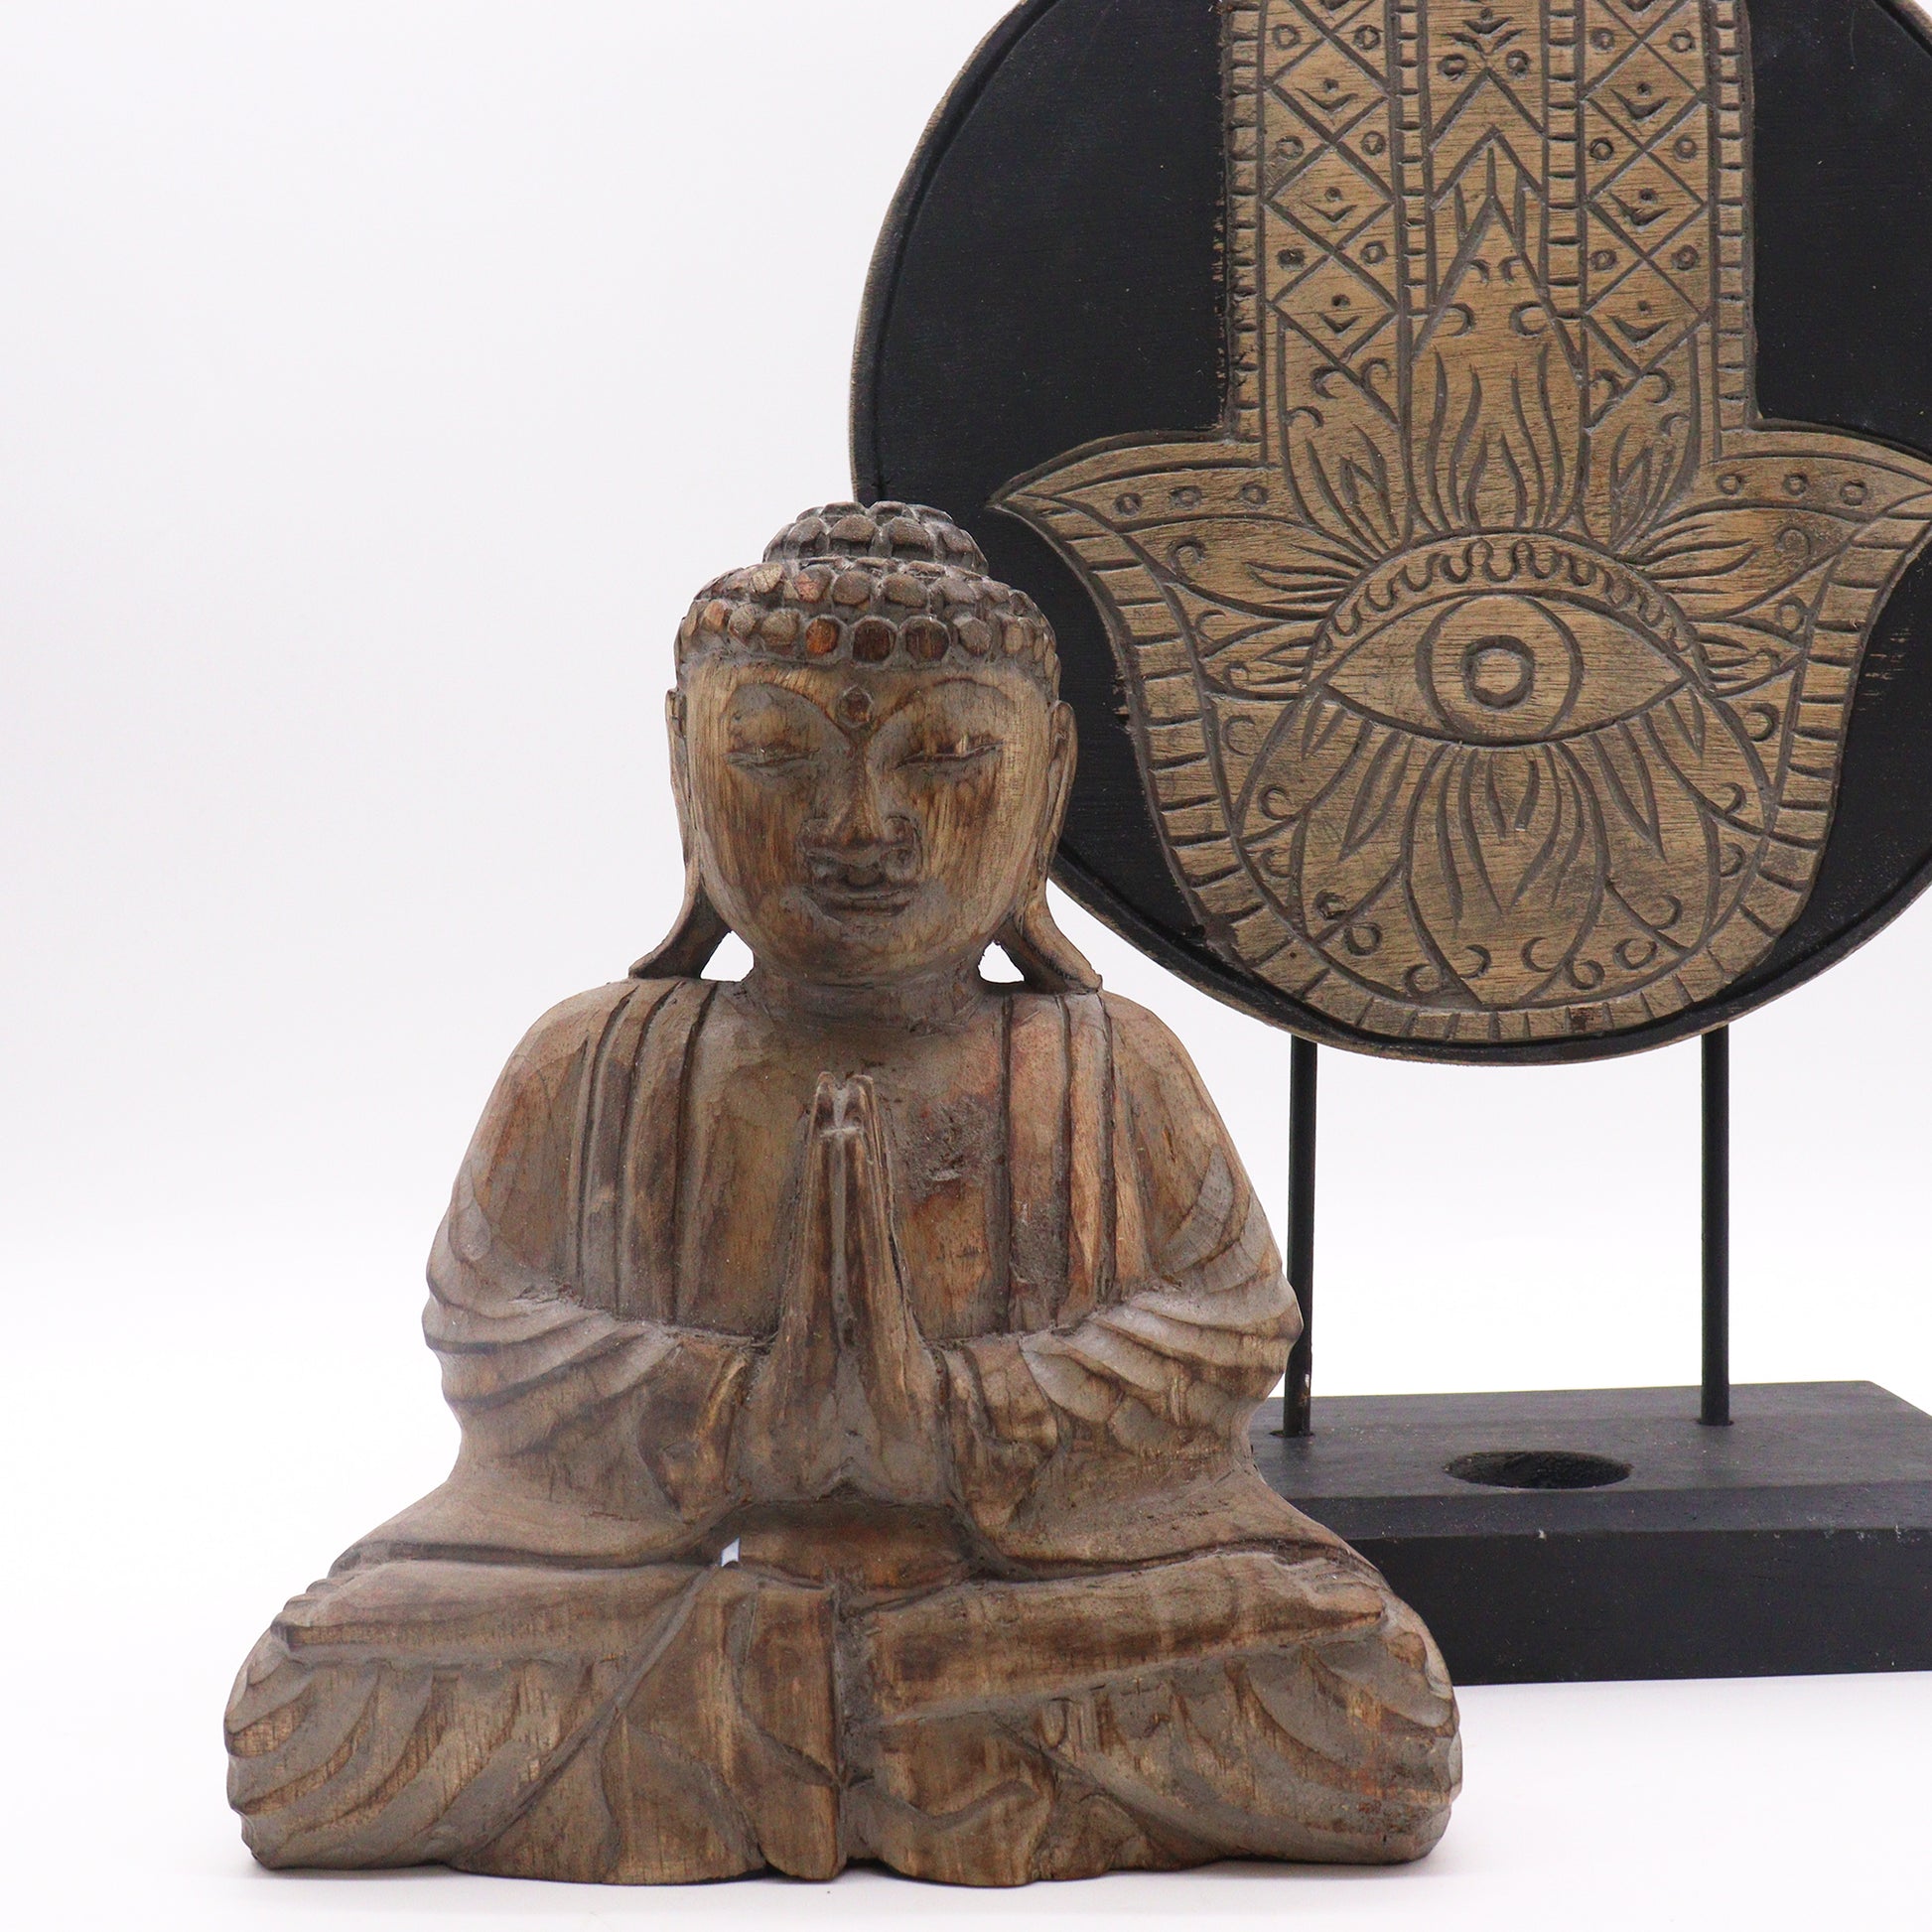 Buddha Feng Shui Set - Hamsa - Grey - Cosmic Serenity Shop